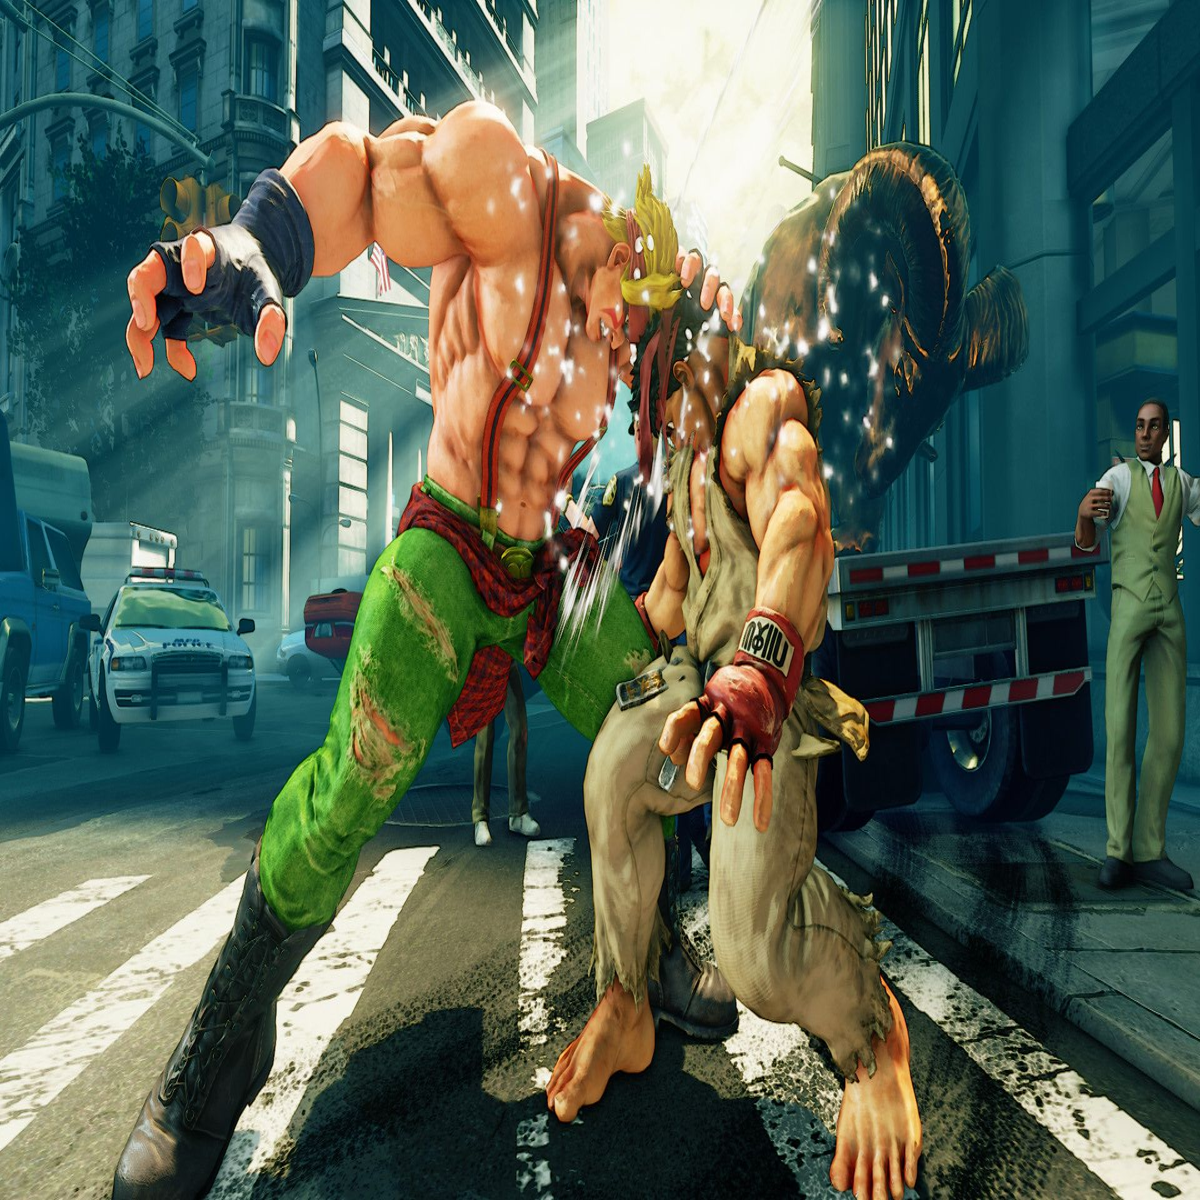 Blanka lands in Street Fighter V: Arcade Edition next week